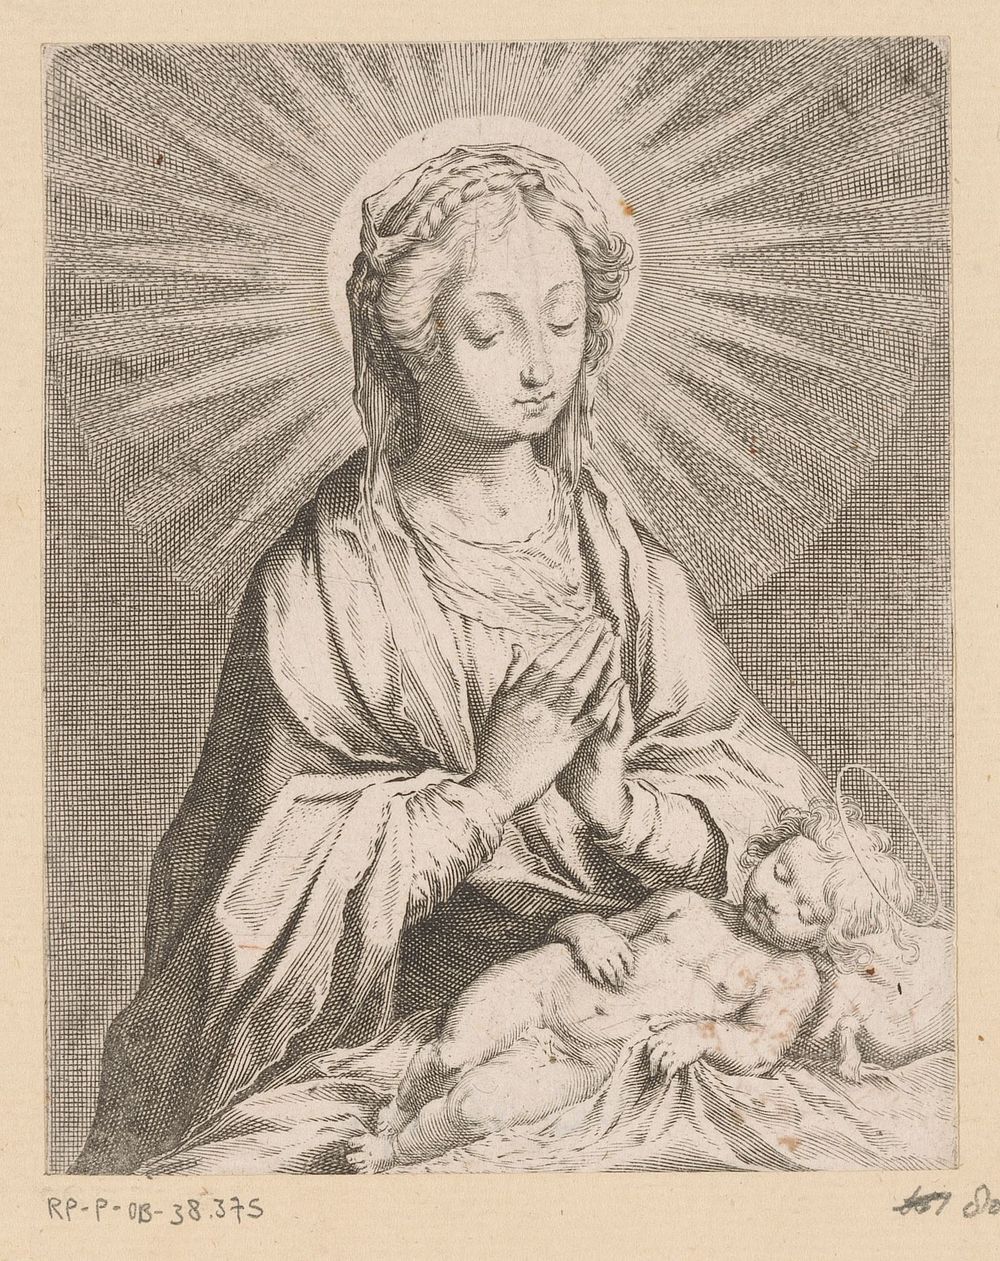 Maria aanbidt het Christuskind (c. 1576 - 1624) by Francesco Villamena and Francesco Vanni